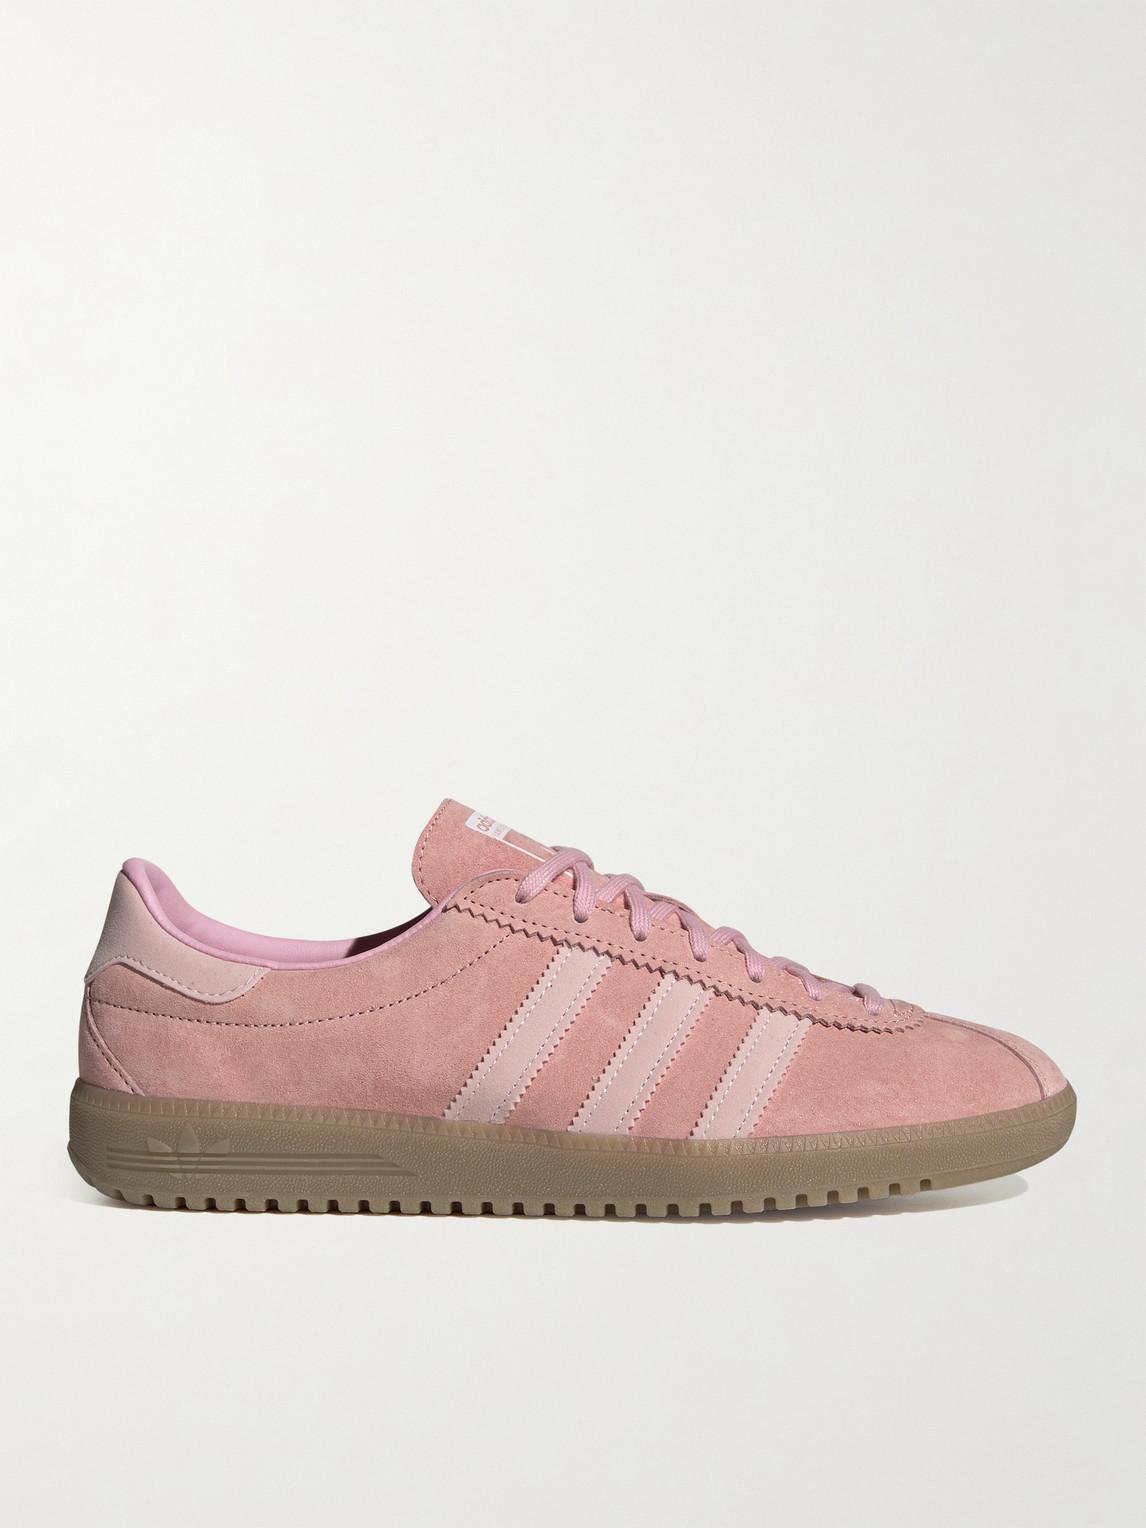 adidas Originals Bermuda Suede Sneakers in Pink for Men